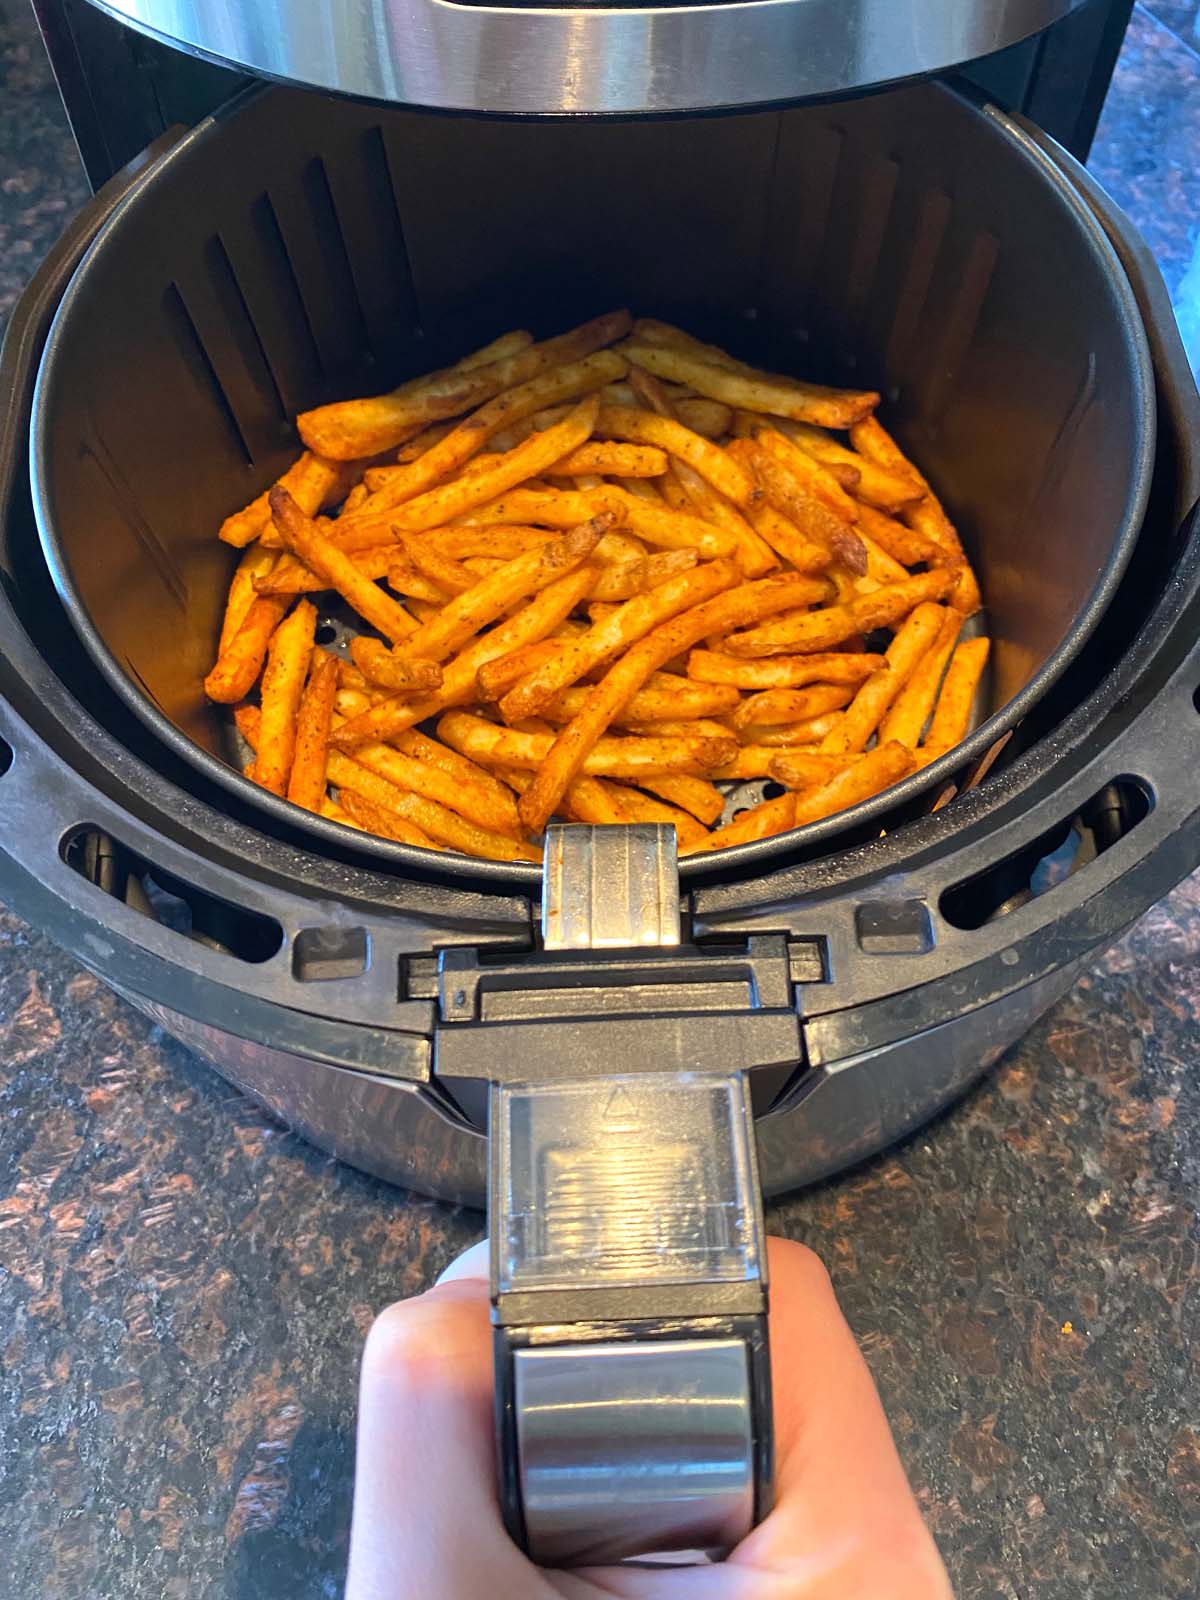 Crispy Air Fryer Frozen French Fries